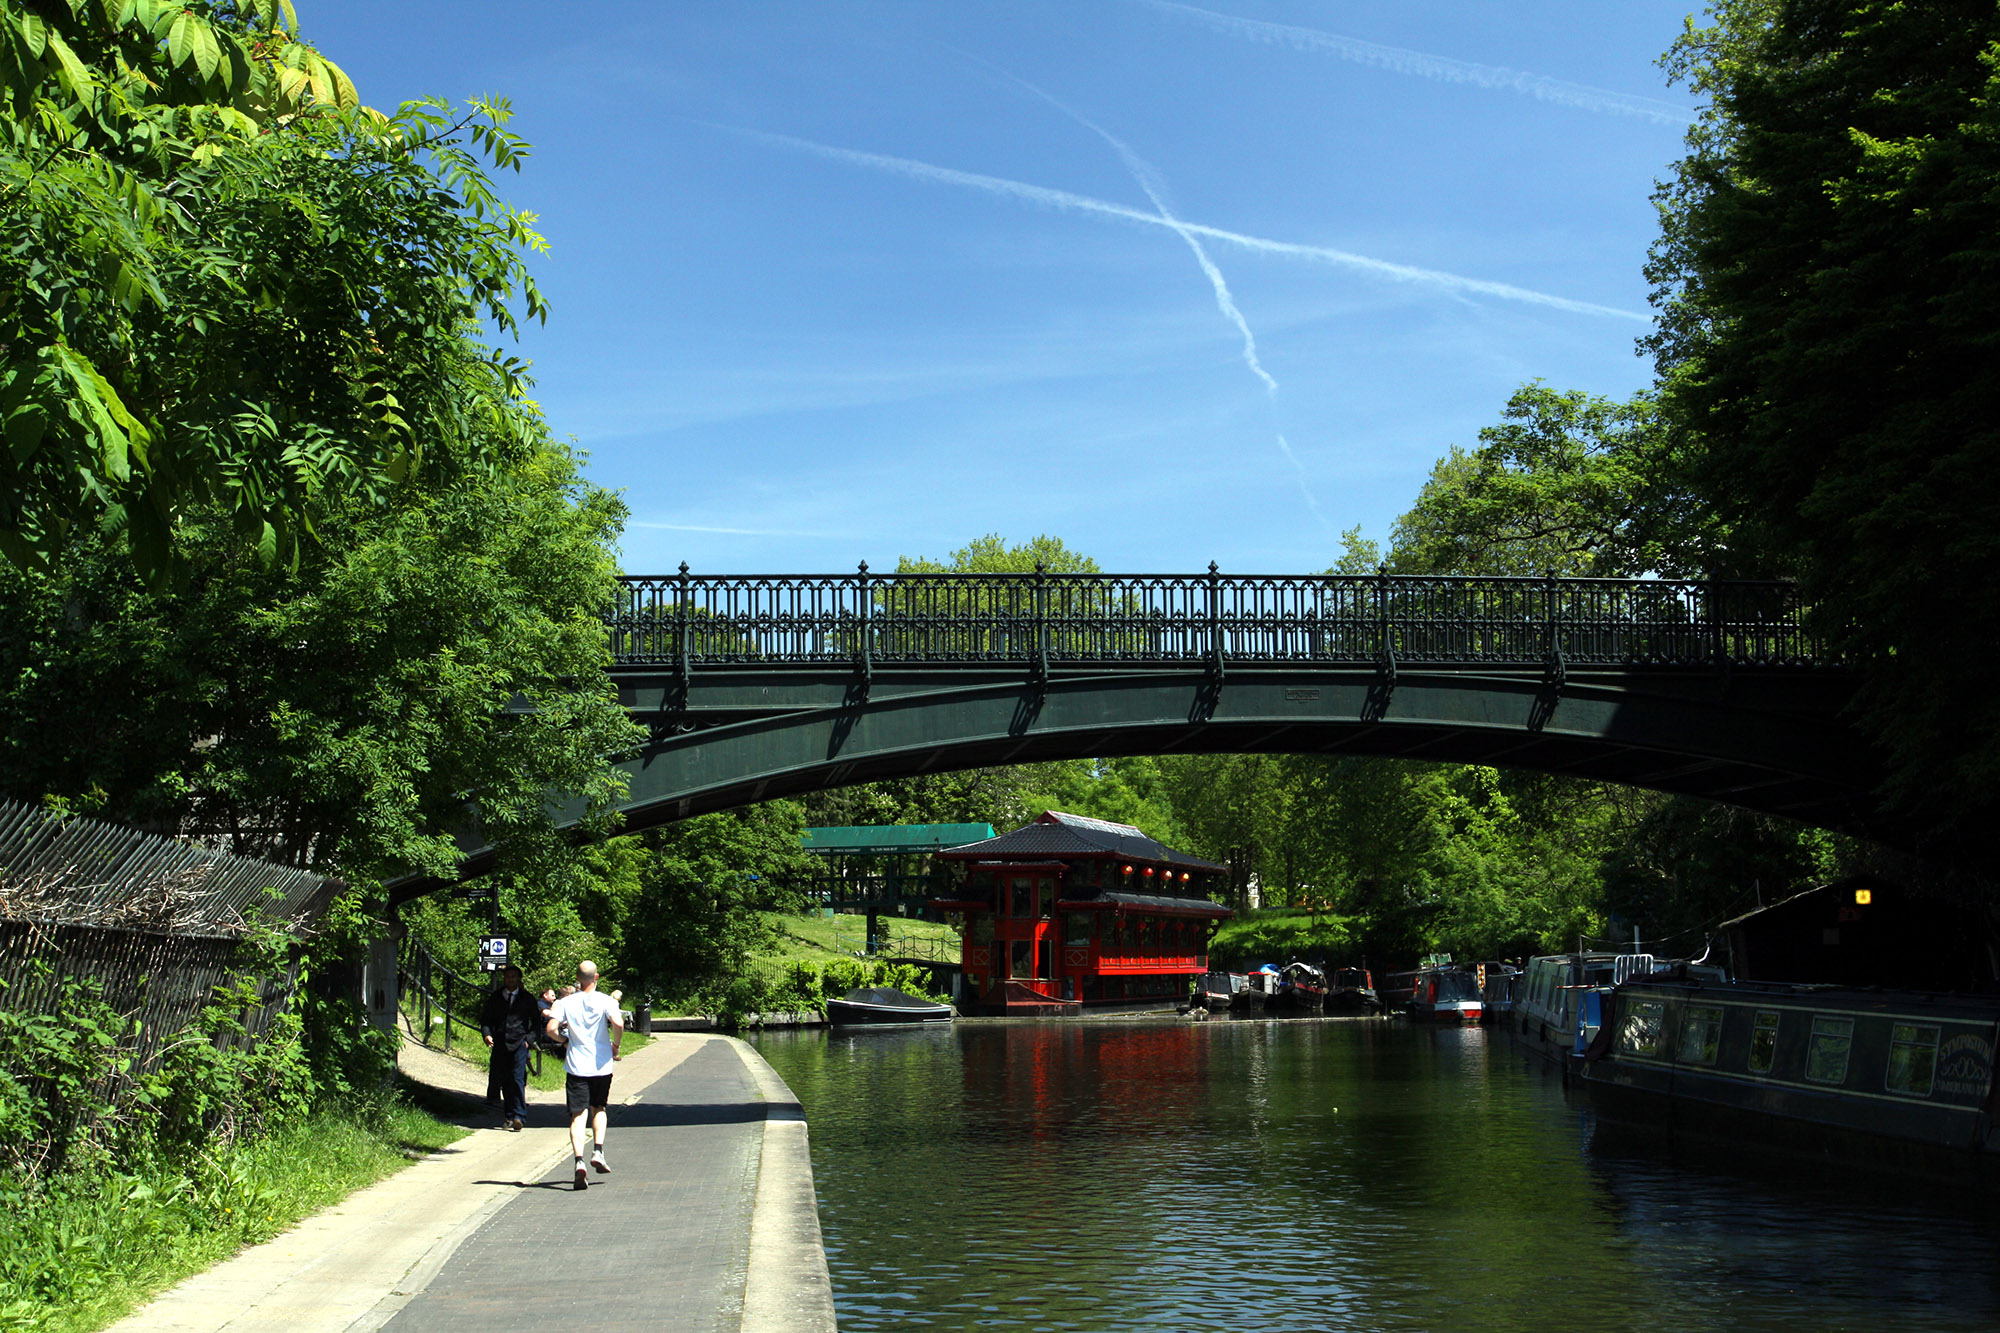 St Mark's Bridge over the Regent's canal